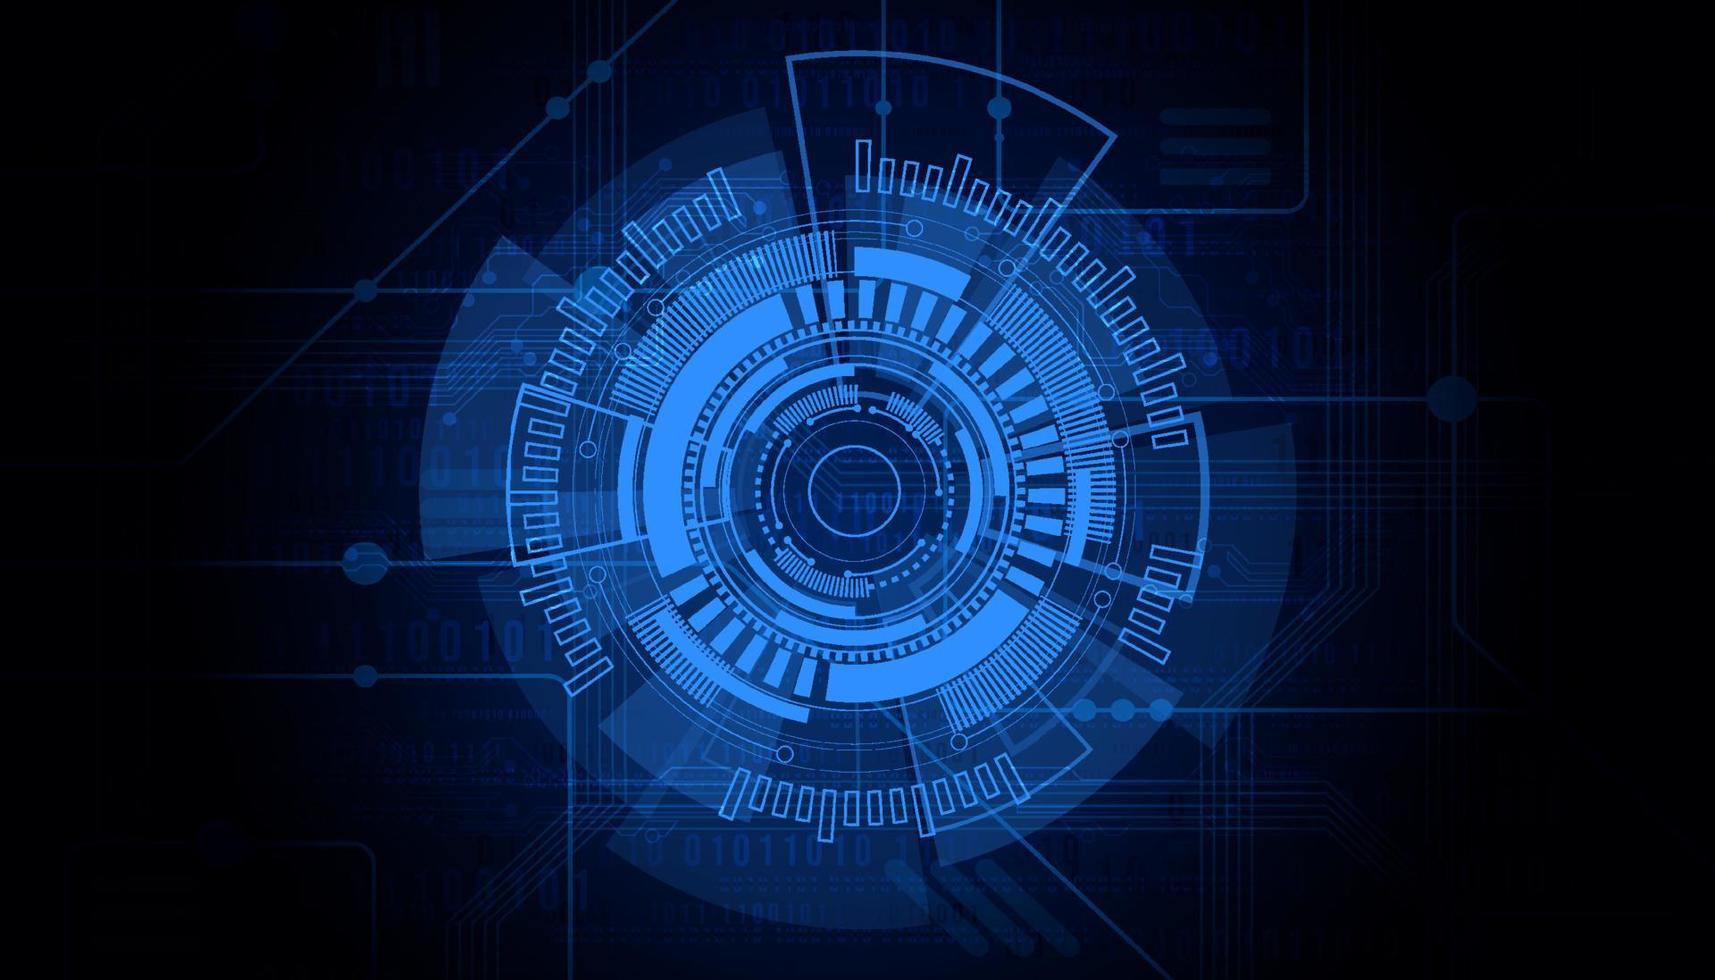 abstract digitaal technologie futuristische stroomkring bord blauw achtergrond, cyber wetenschap tech lay-out, innovatie toekomst ai groot gegevens, globaal internet netwerk verbinding, wolk hi-tech illustratie vector